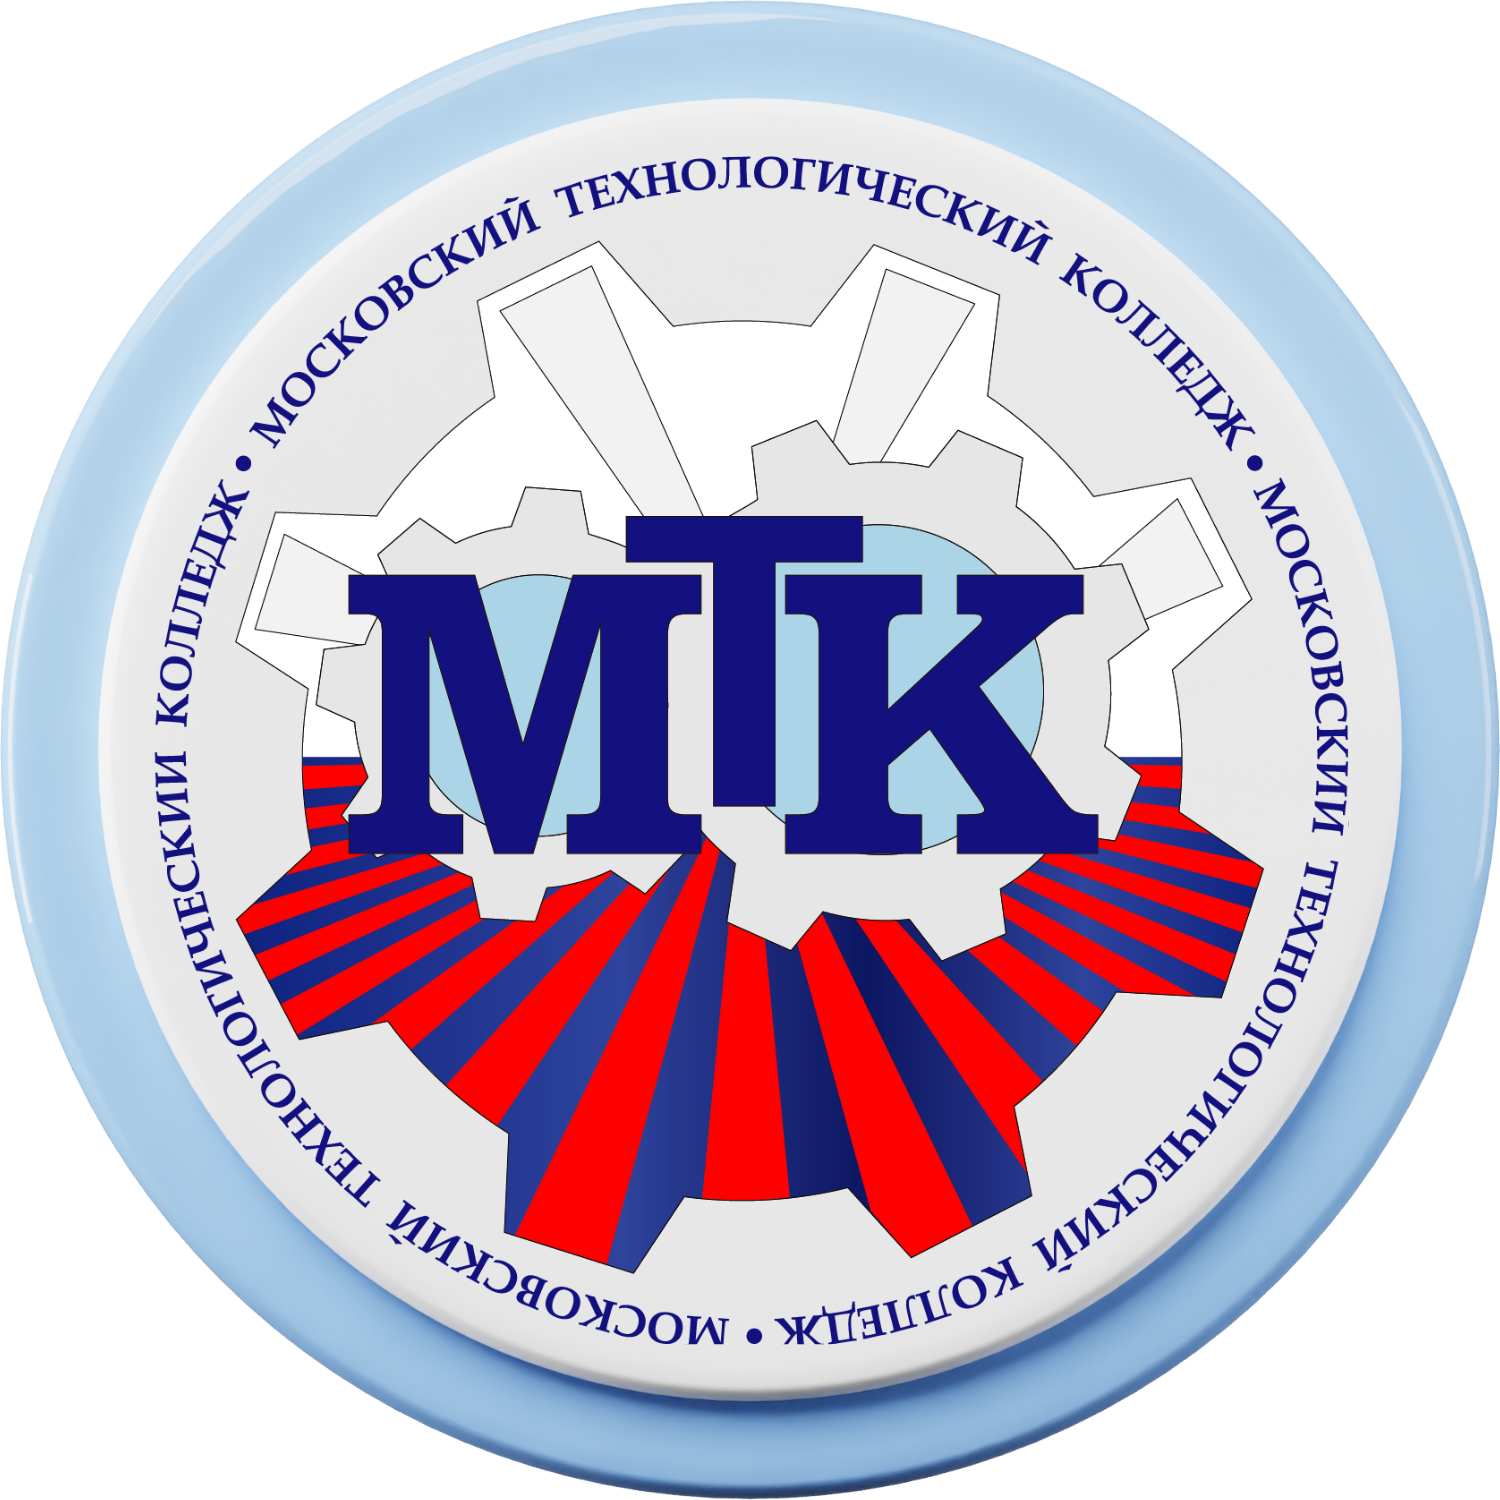 Сайт мтк колледж. Московский Технологический колледж, МТК. МТК логотип. МТК колледж Москва. Магнитогорский Технологический колледж.